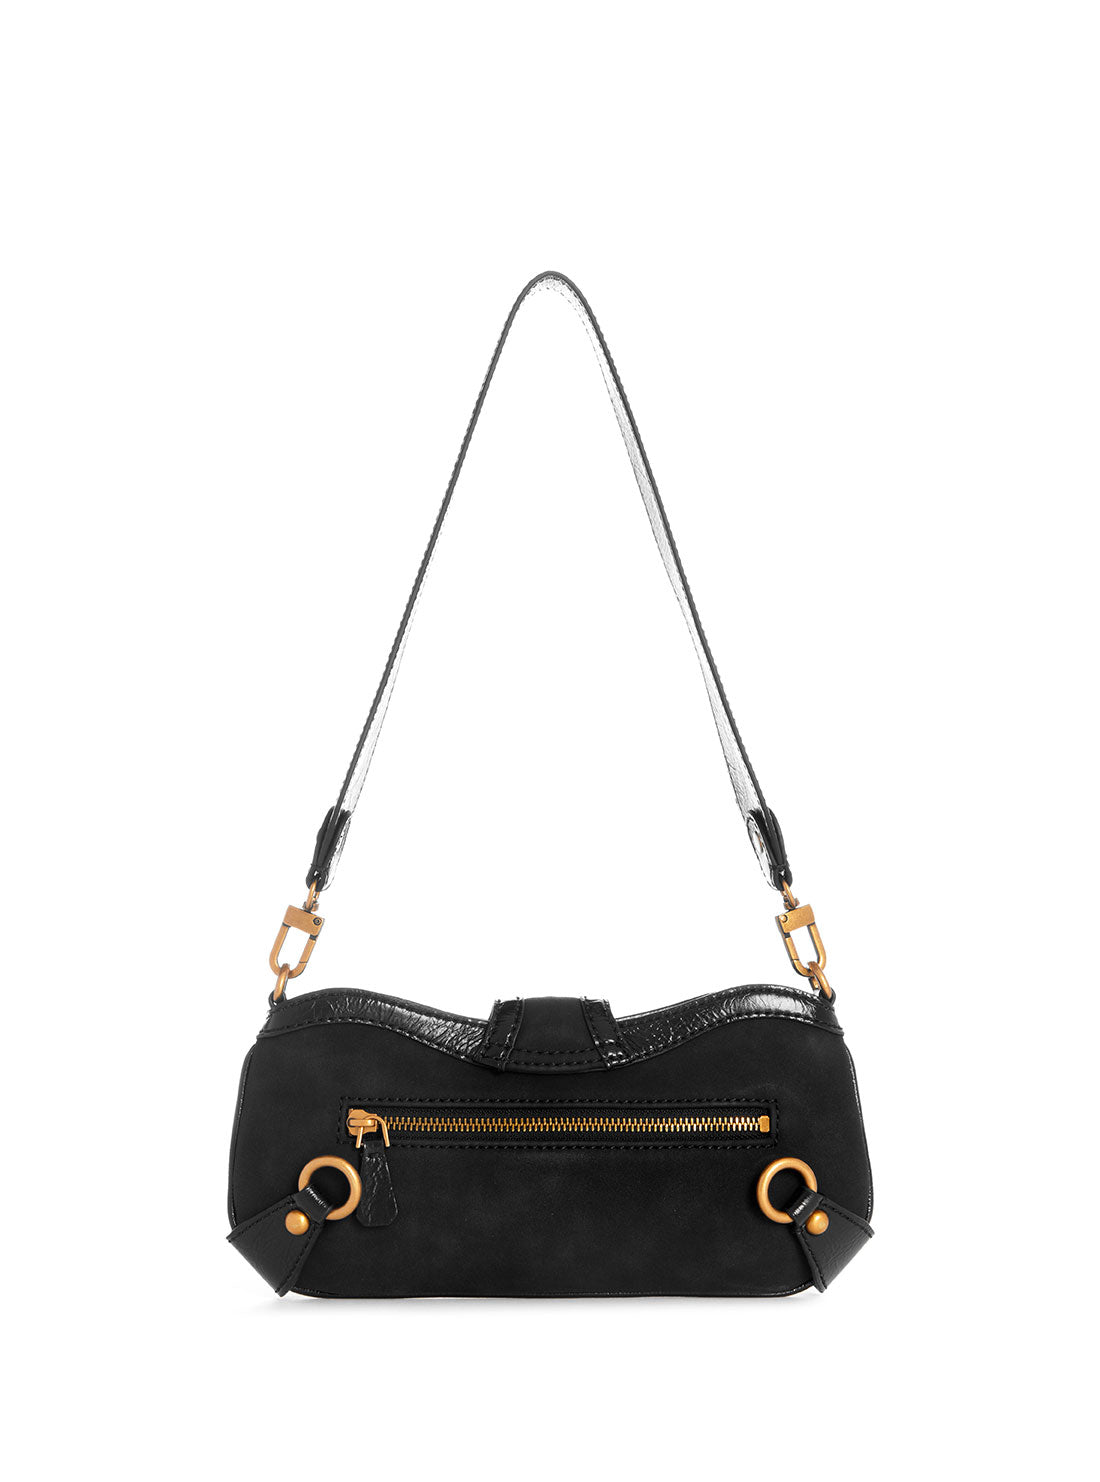 GUESS Women's Black Gloss Vintage Shoulder Bag EB899718 Back View